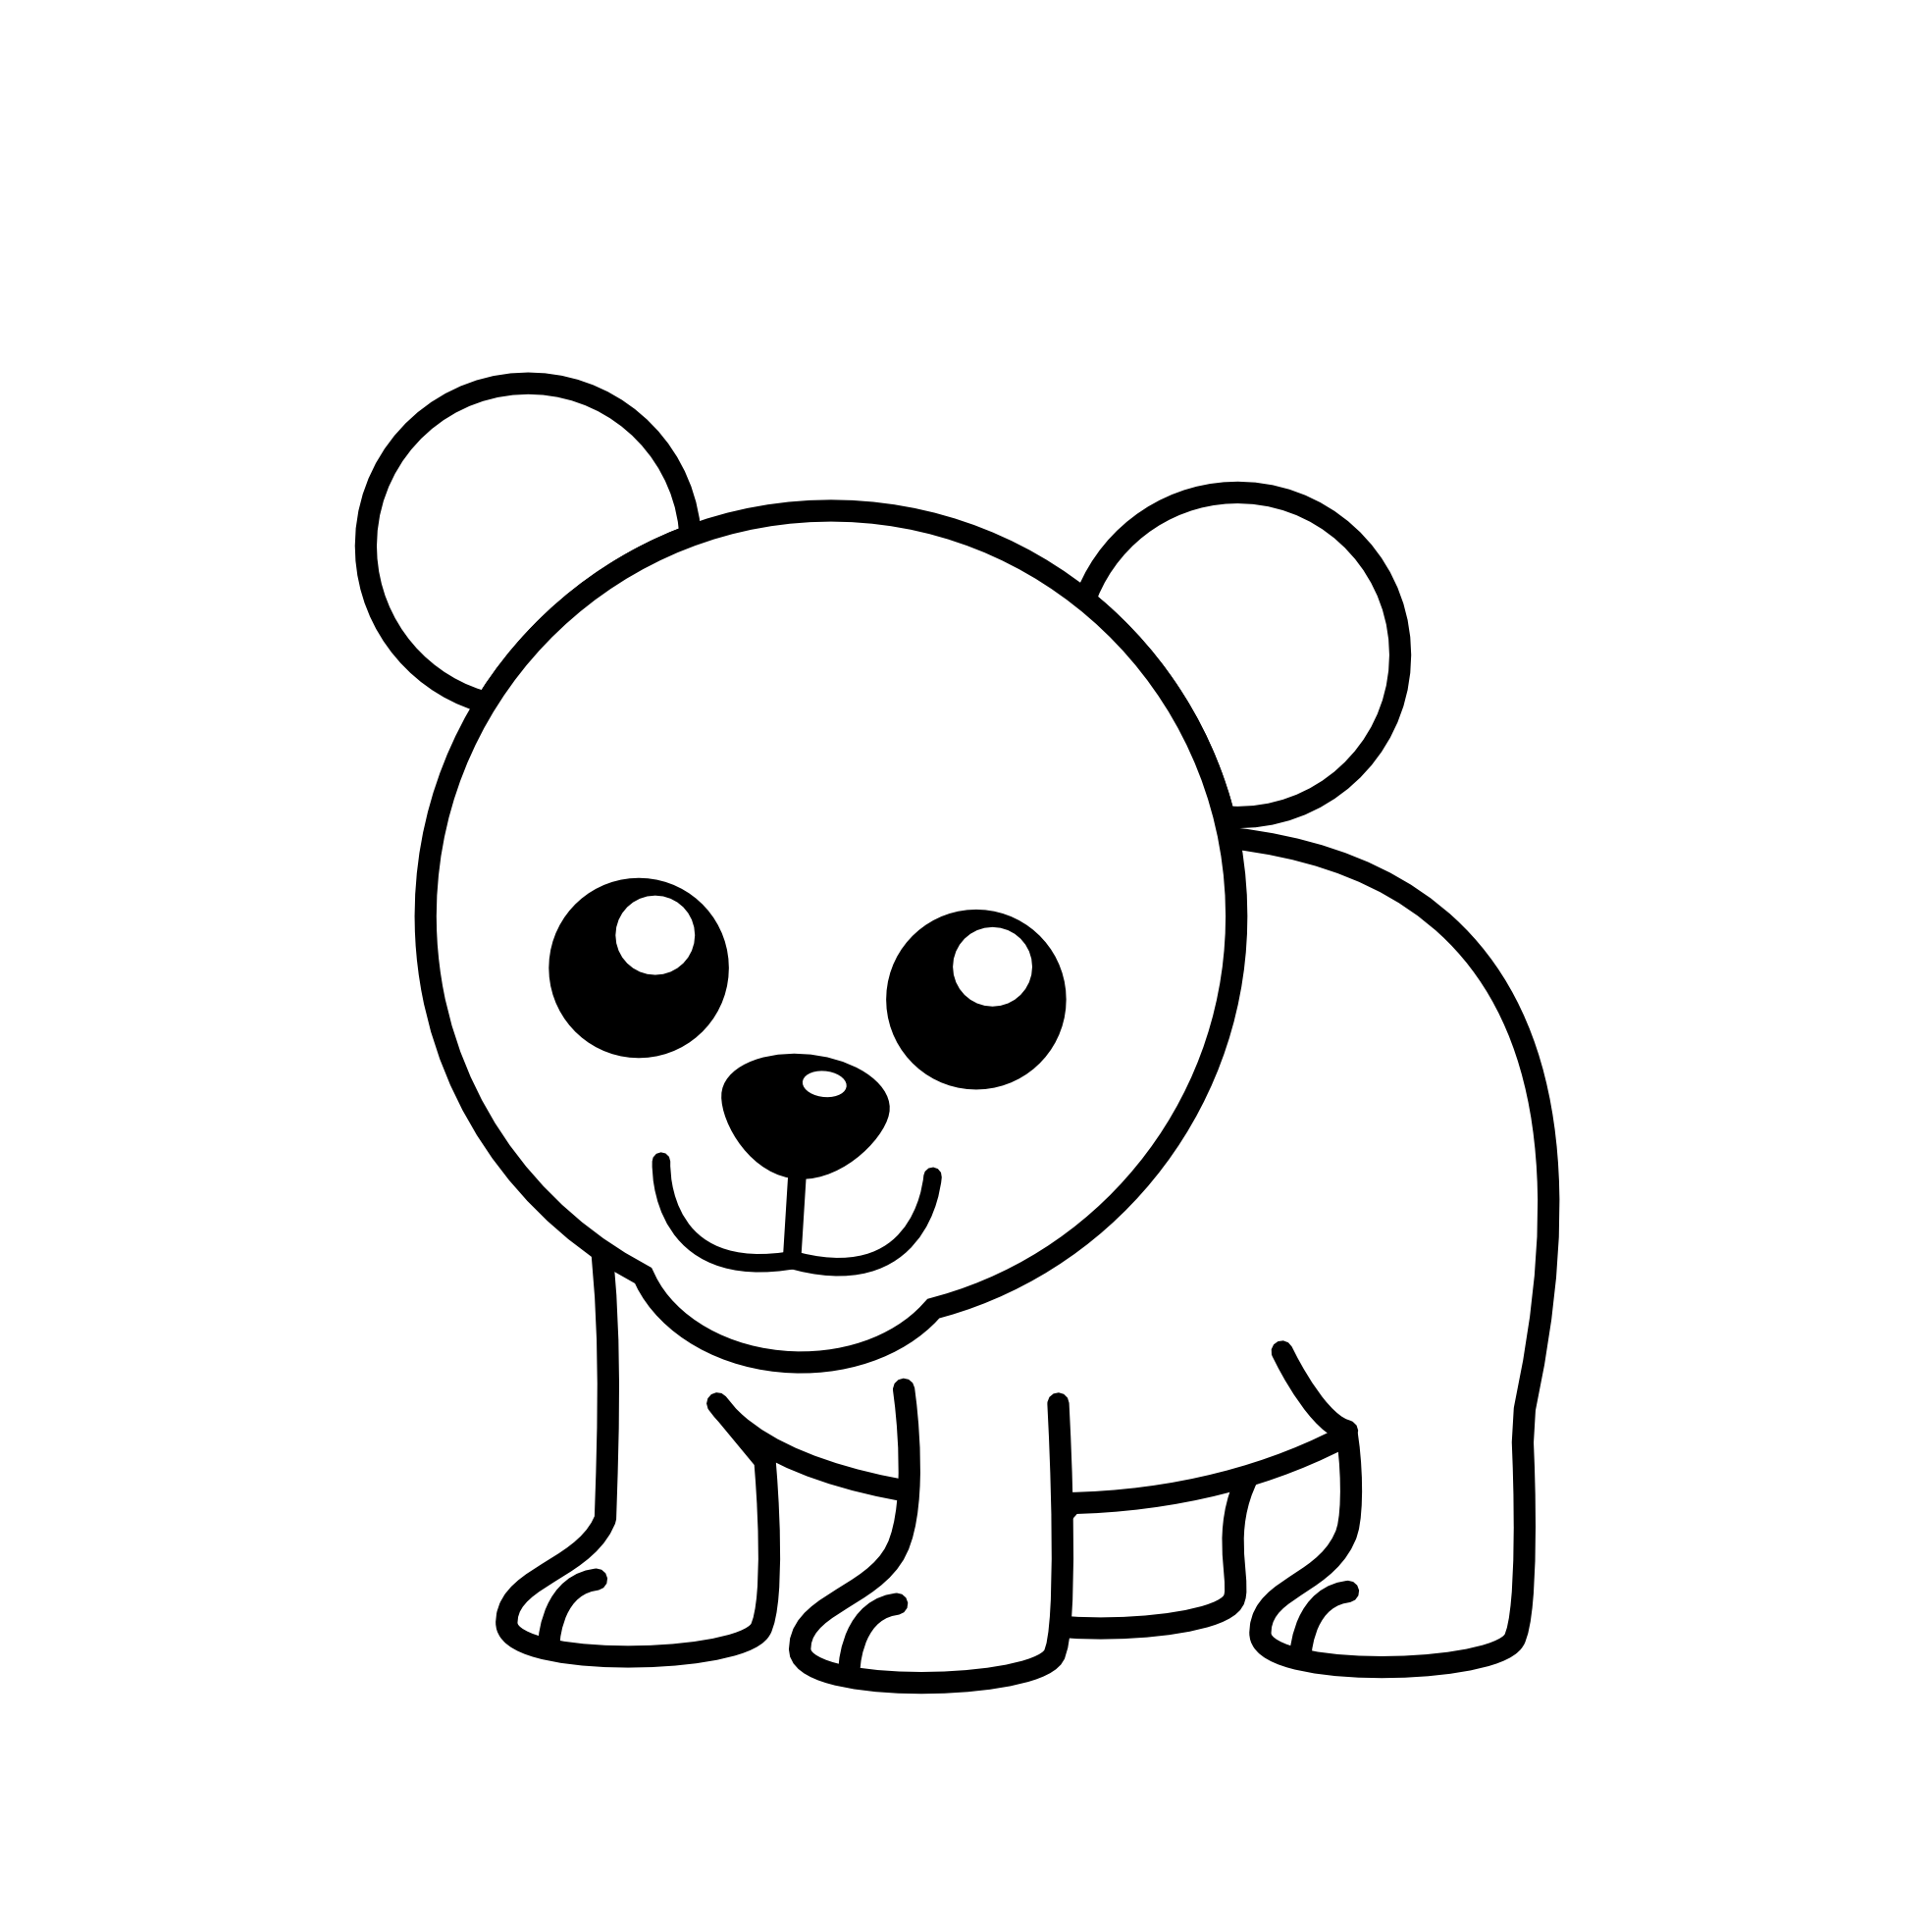 Polar Bear Clipart Black And White | Clipart Panda - Free Clipart ...